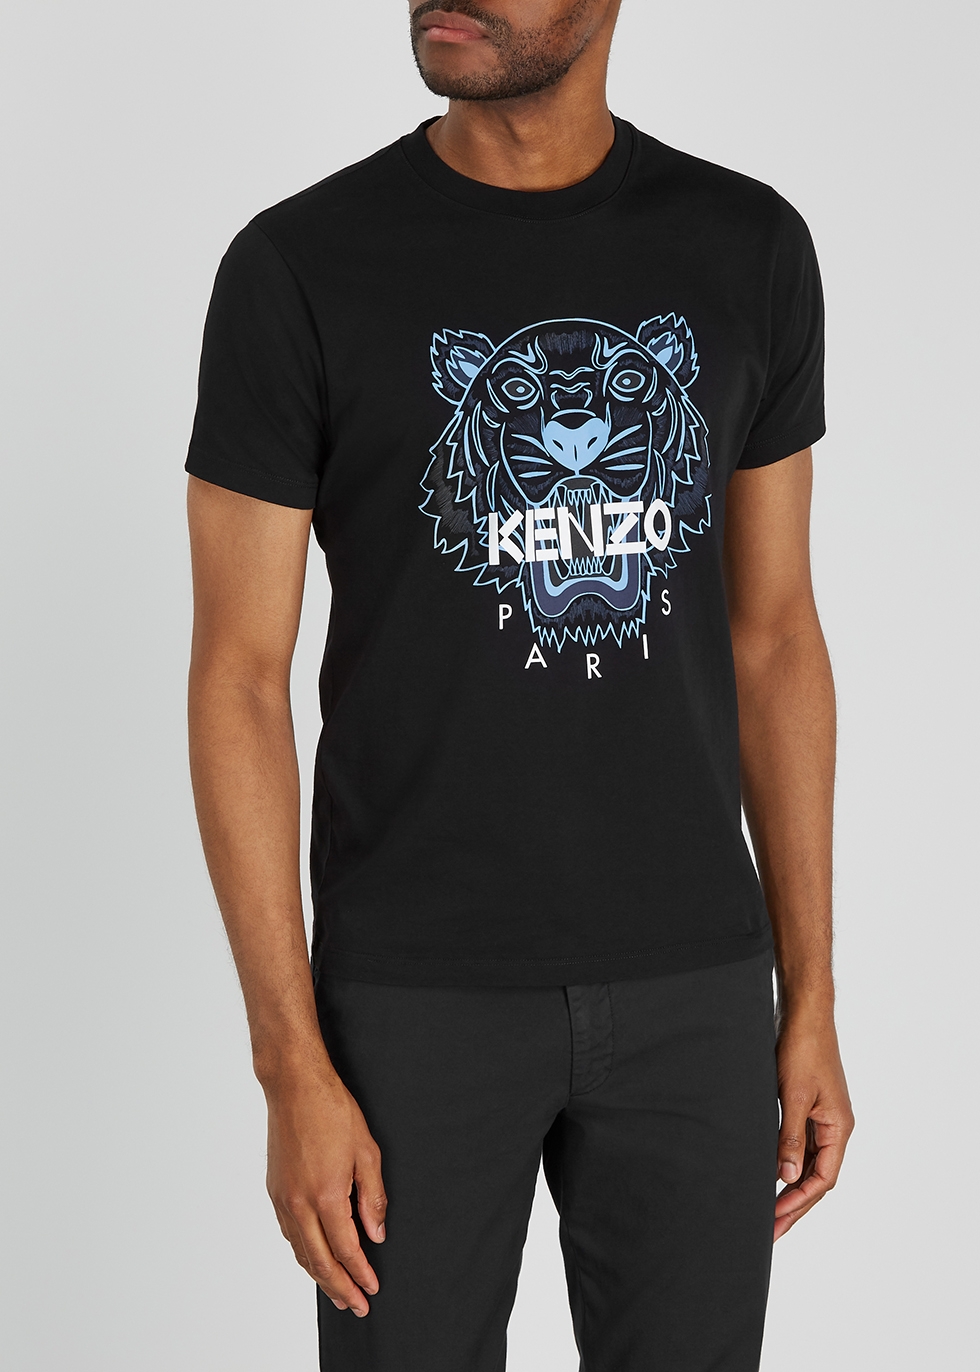 kenzo t shirt black tiger